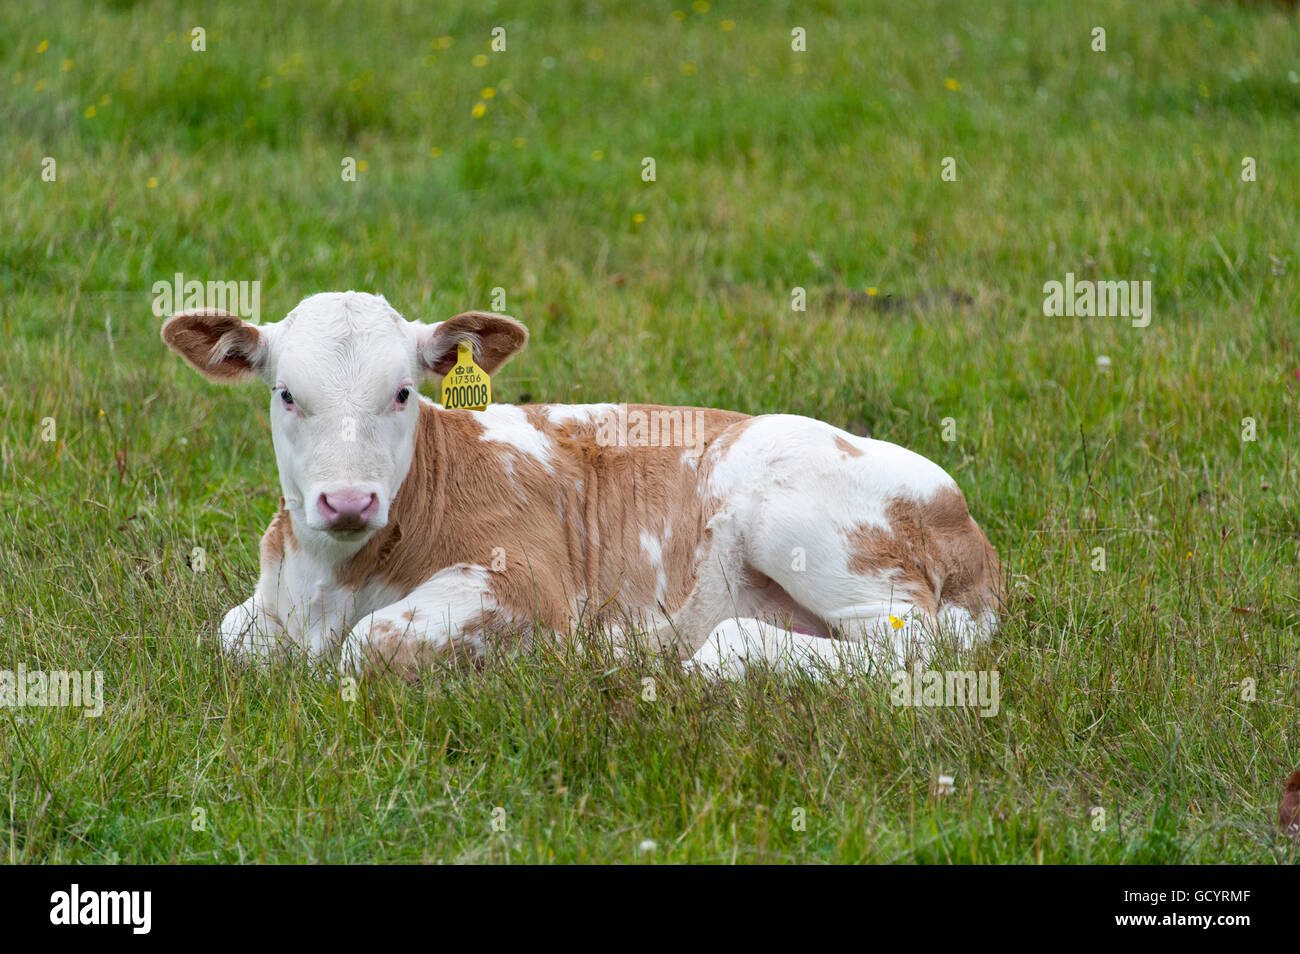 Young Simmental calf sat in pasture, Cumbria, UK. Stock Photo